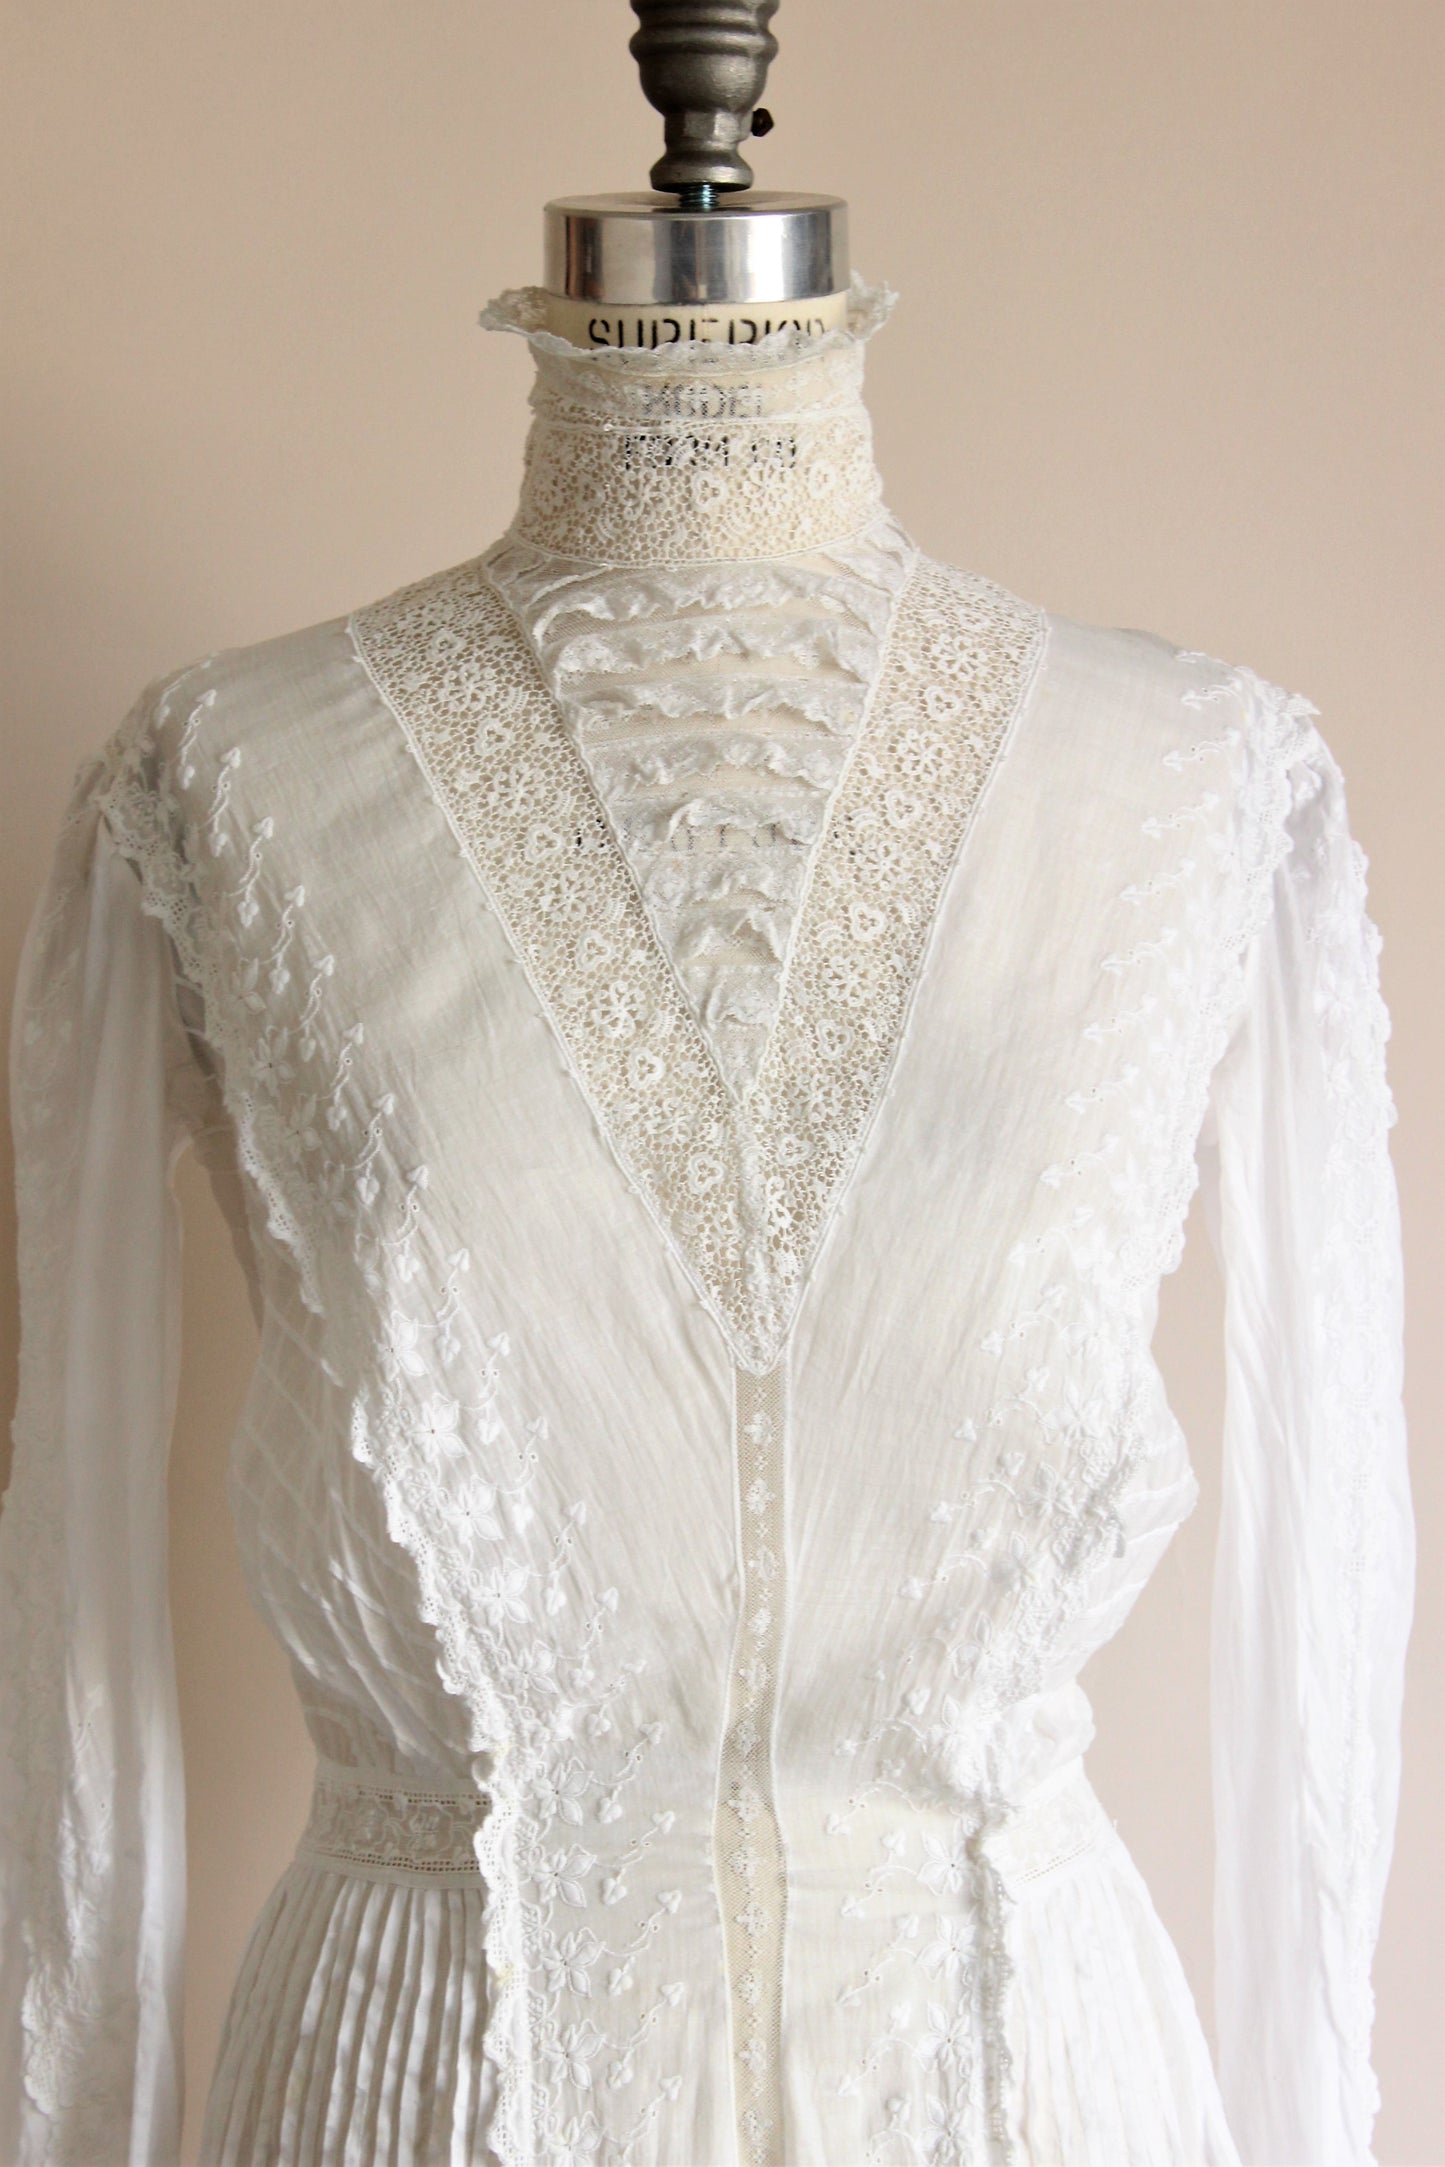 Antique Edwardian White Dress, "THE" Dress